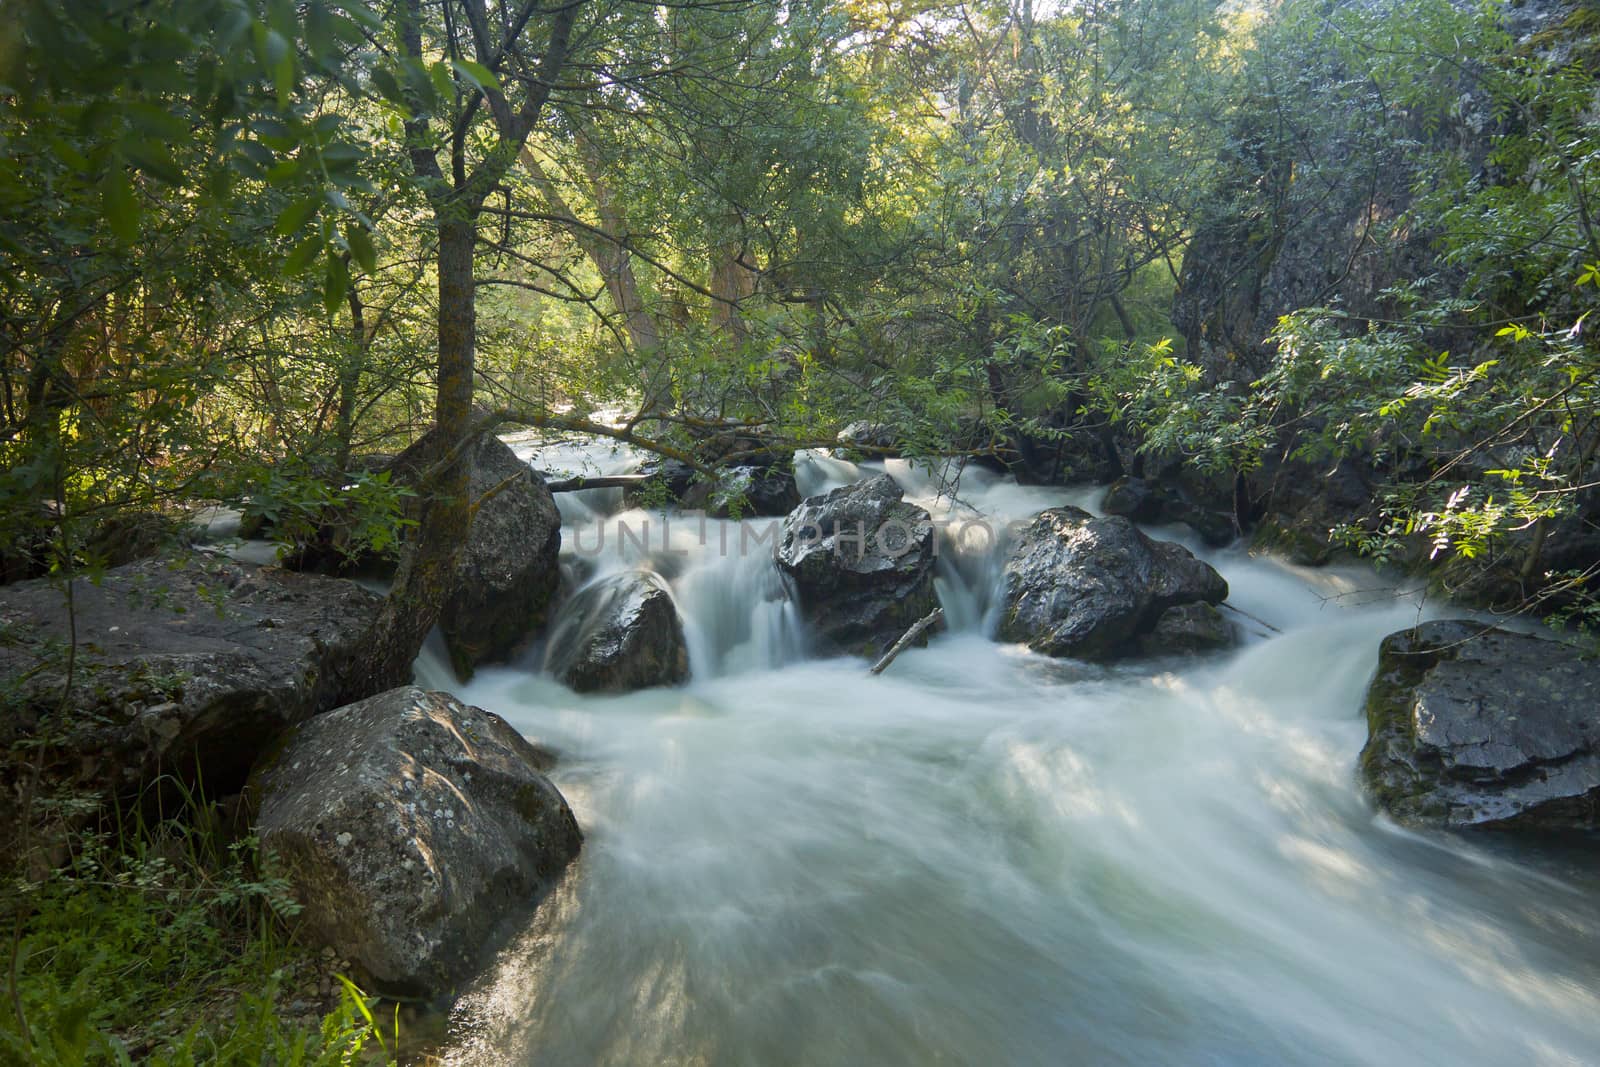 River Dulce stream in Guadalajara, Spain by dannyus